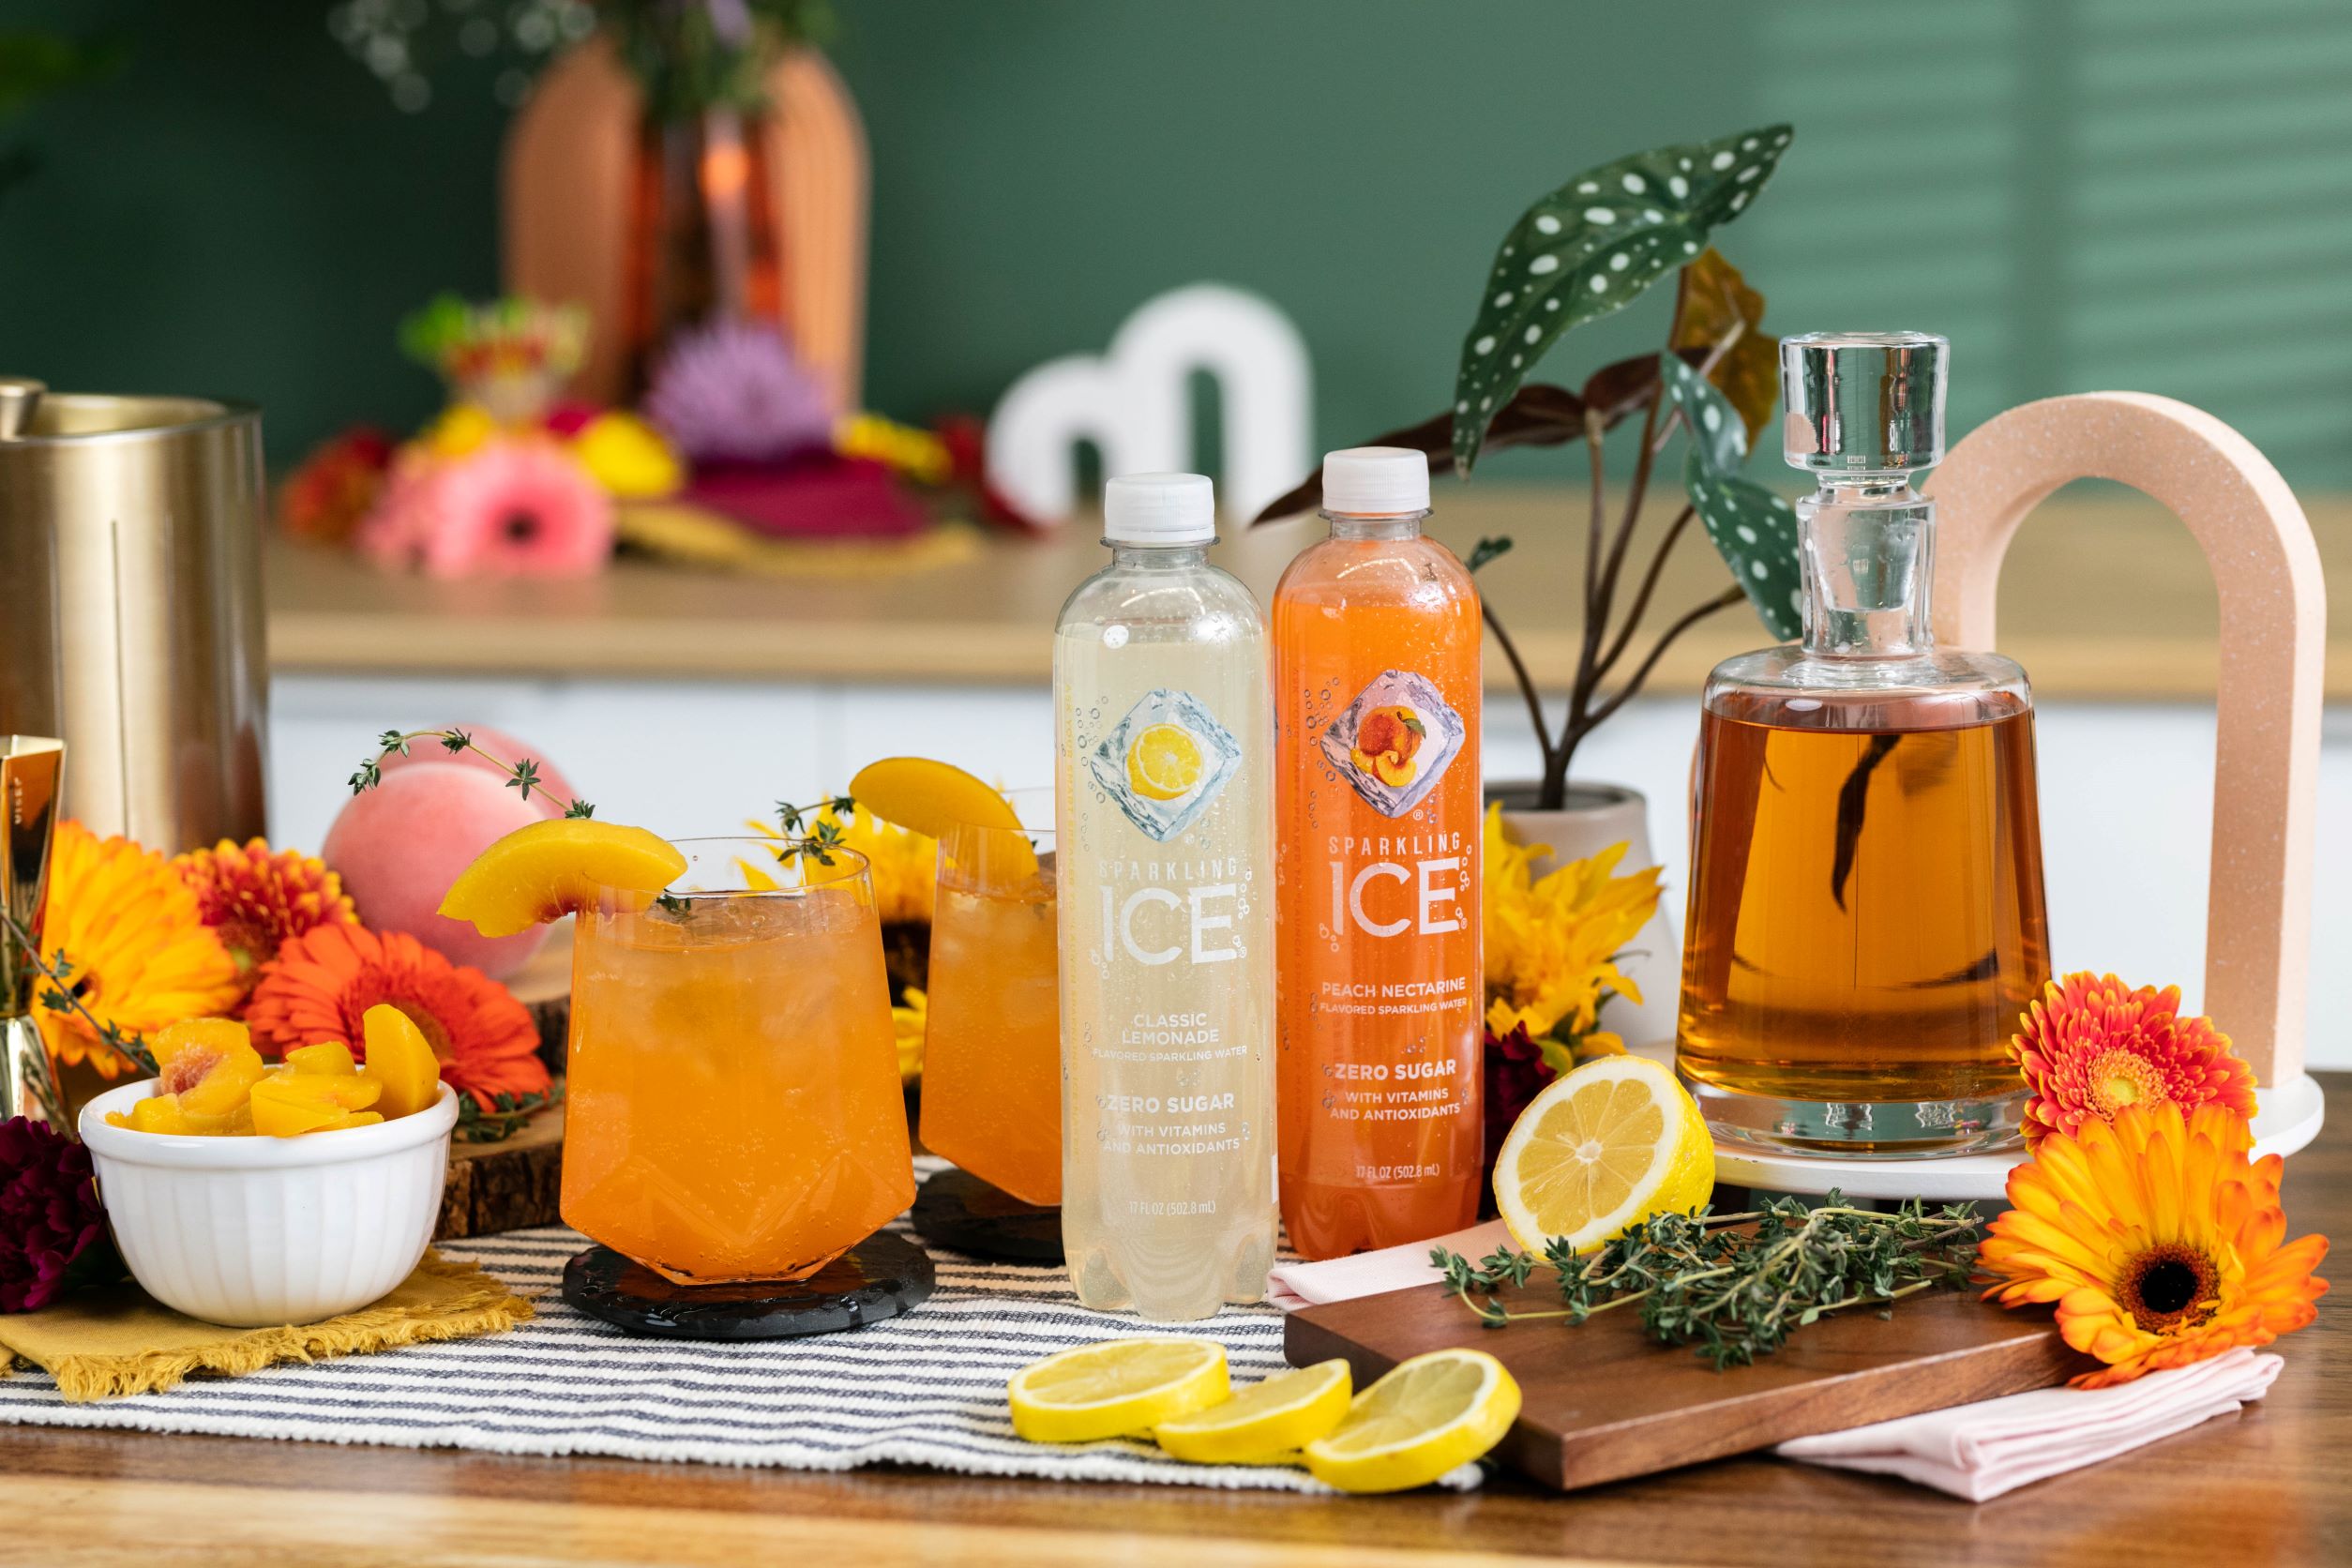 https://www.sparklingice.com/wp-content/uploads/2023/03/Sparkling-Ice-Bourbon-Peach-Lemonade-Cocktail.jpg